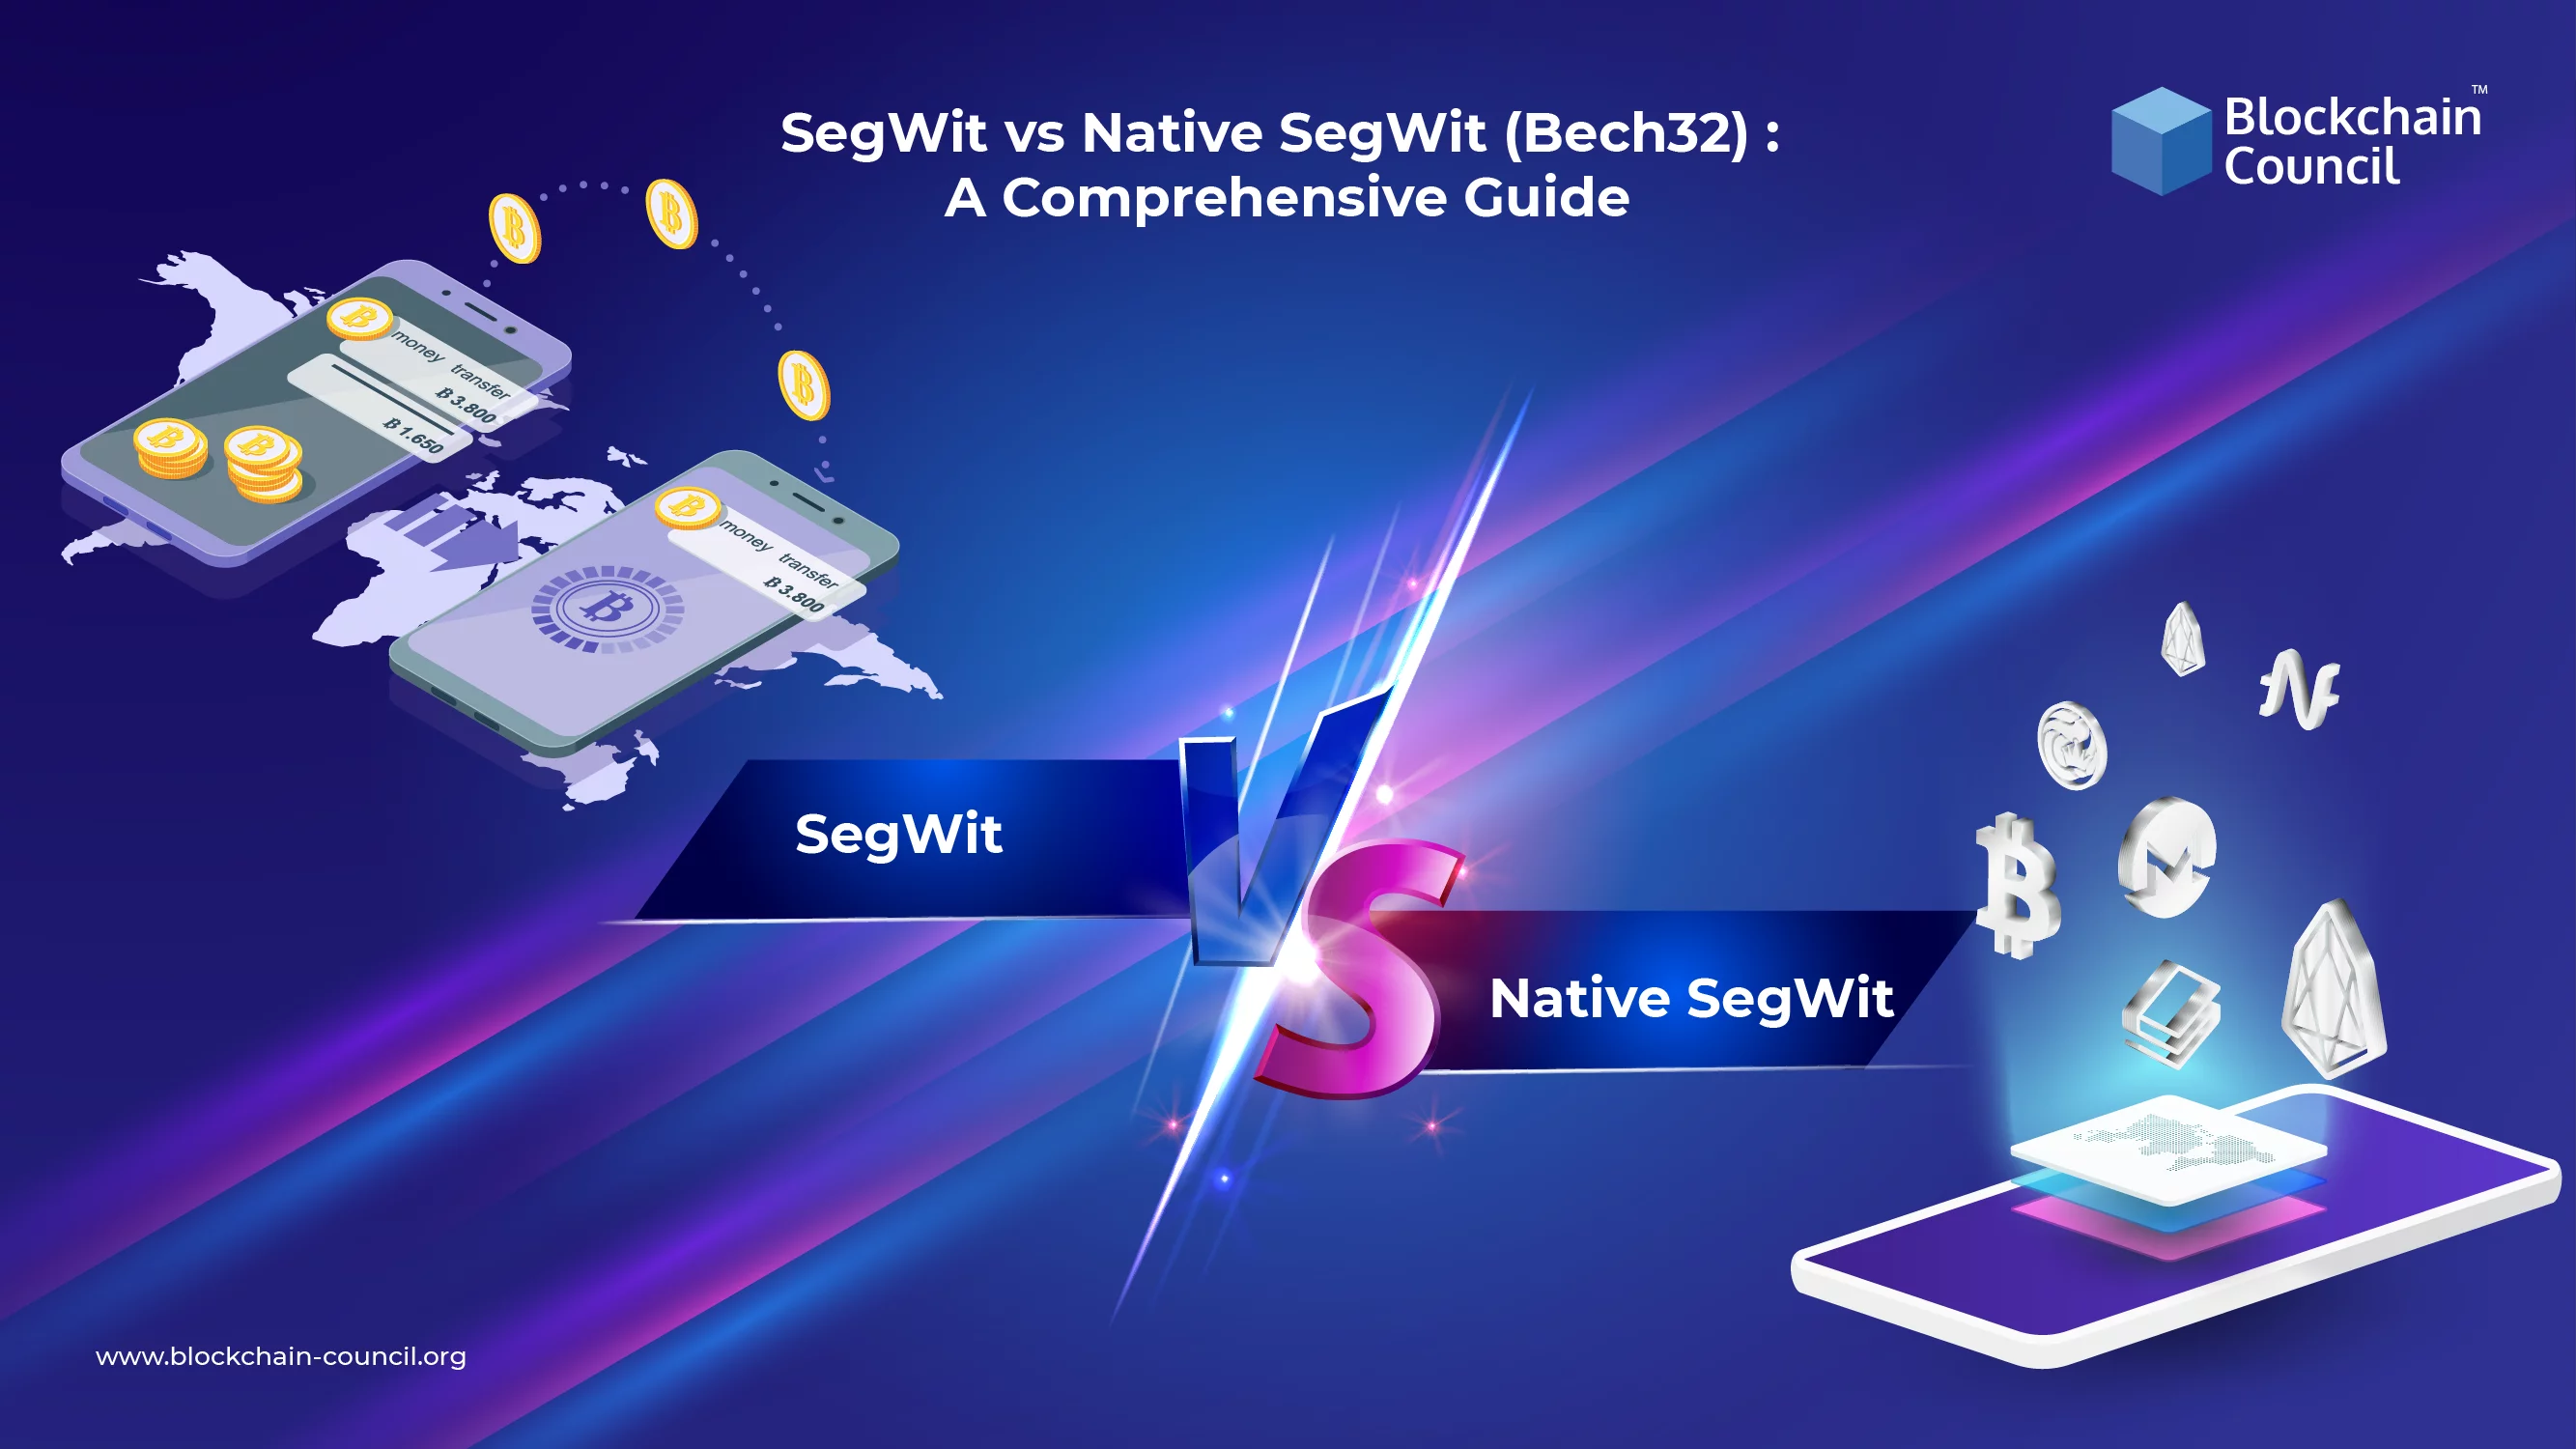 SegWit vs Native SegWit (Bech32) A Comprehensive Guide